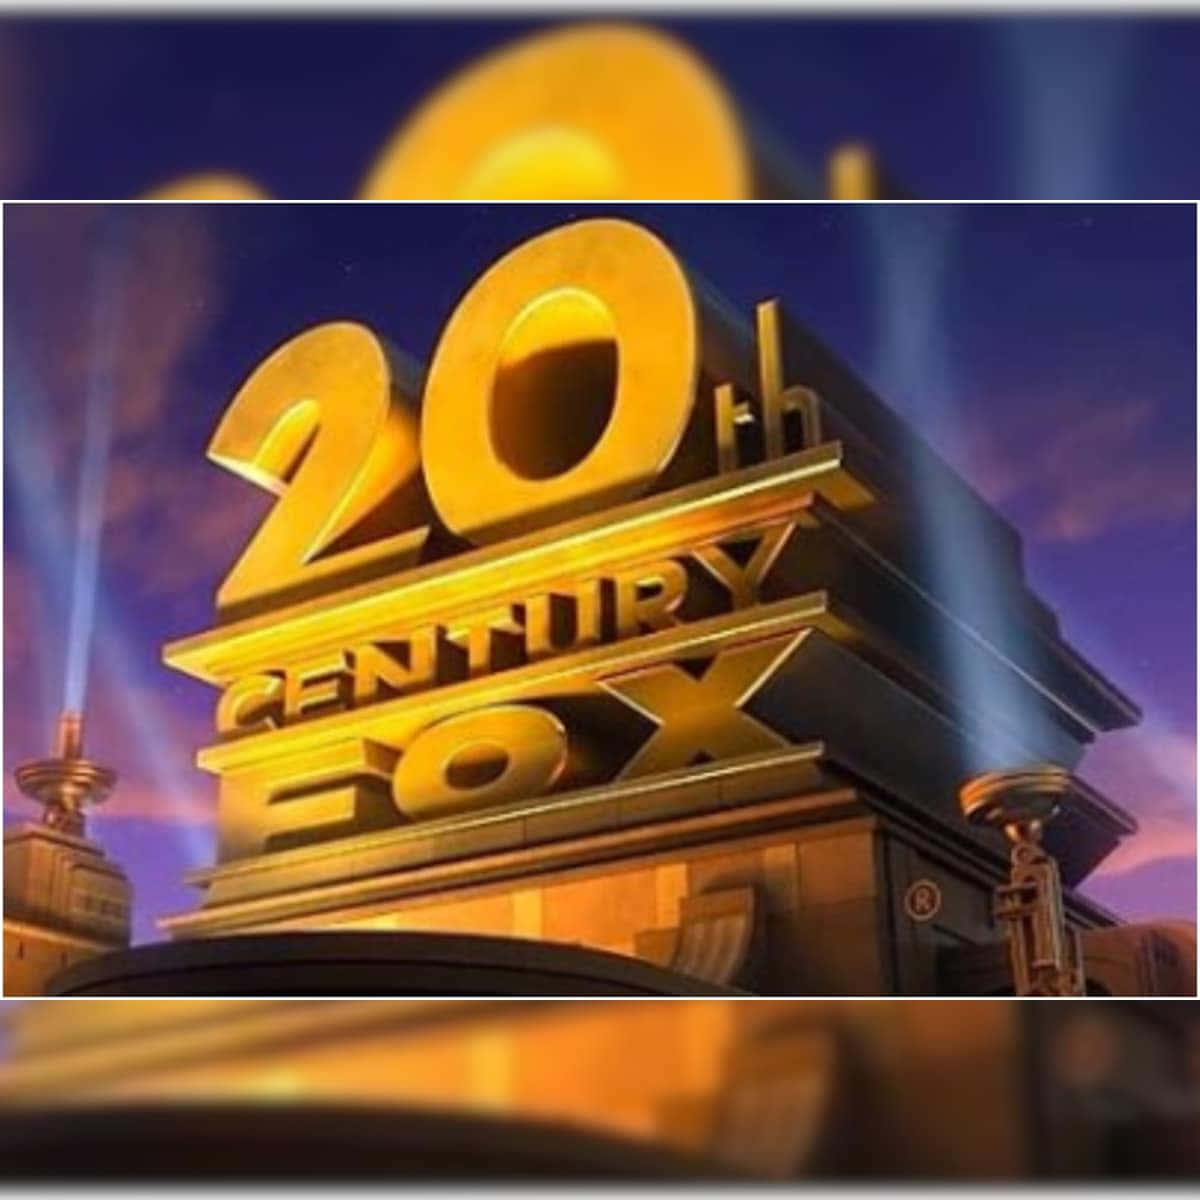 Logotipoda 20th Century Fox Com Luzes Acesas.